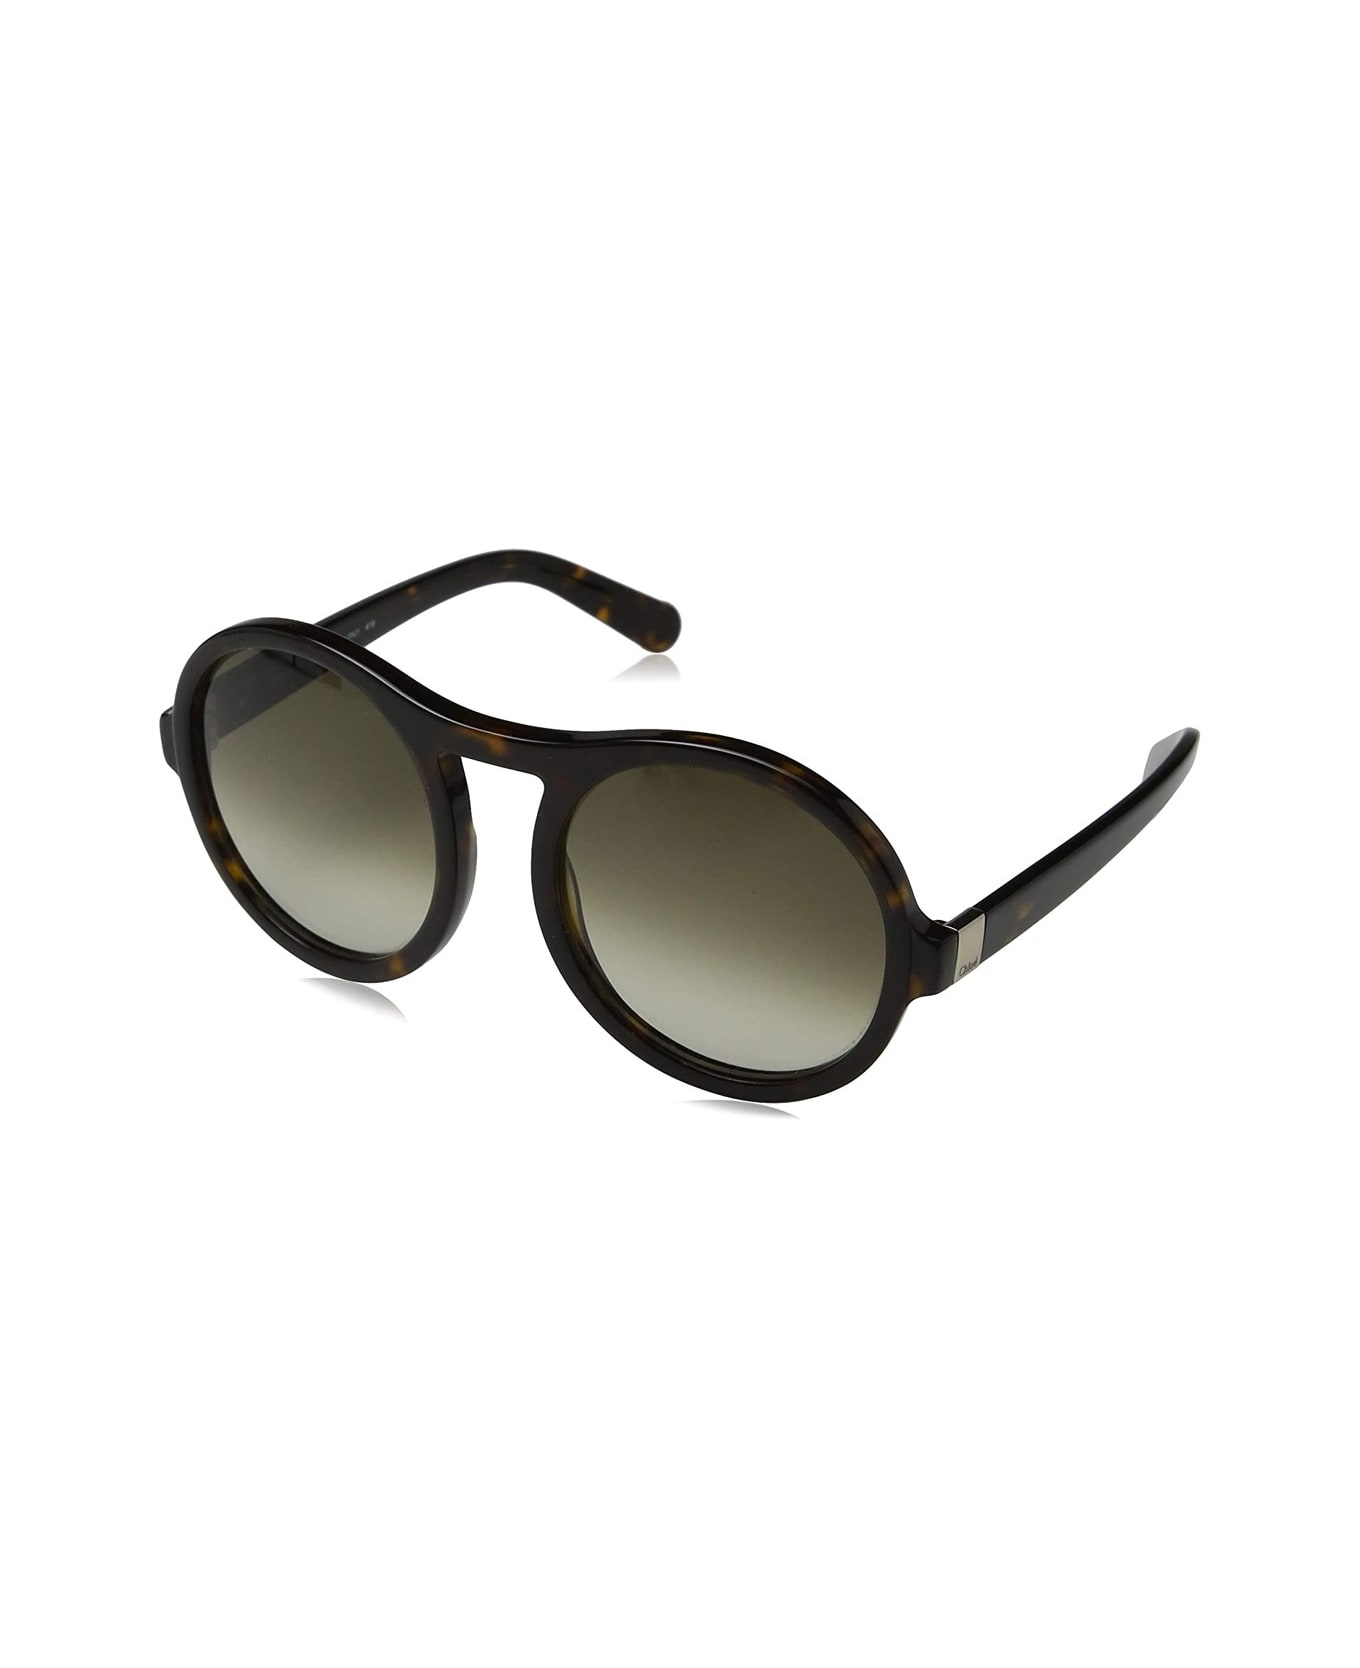 Chloé Ce715s Sunglasses - Marrone